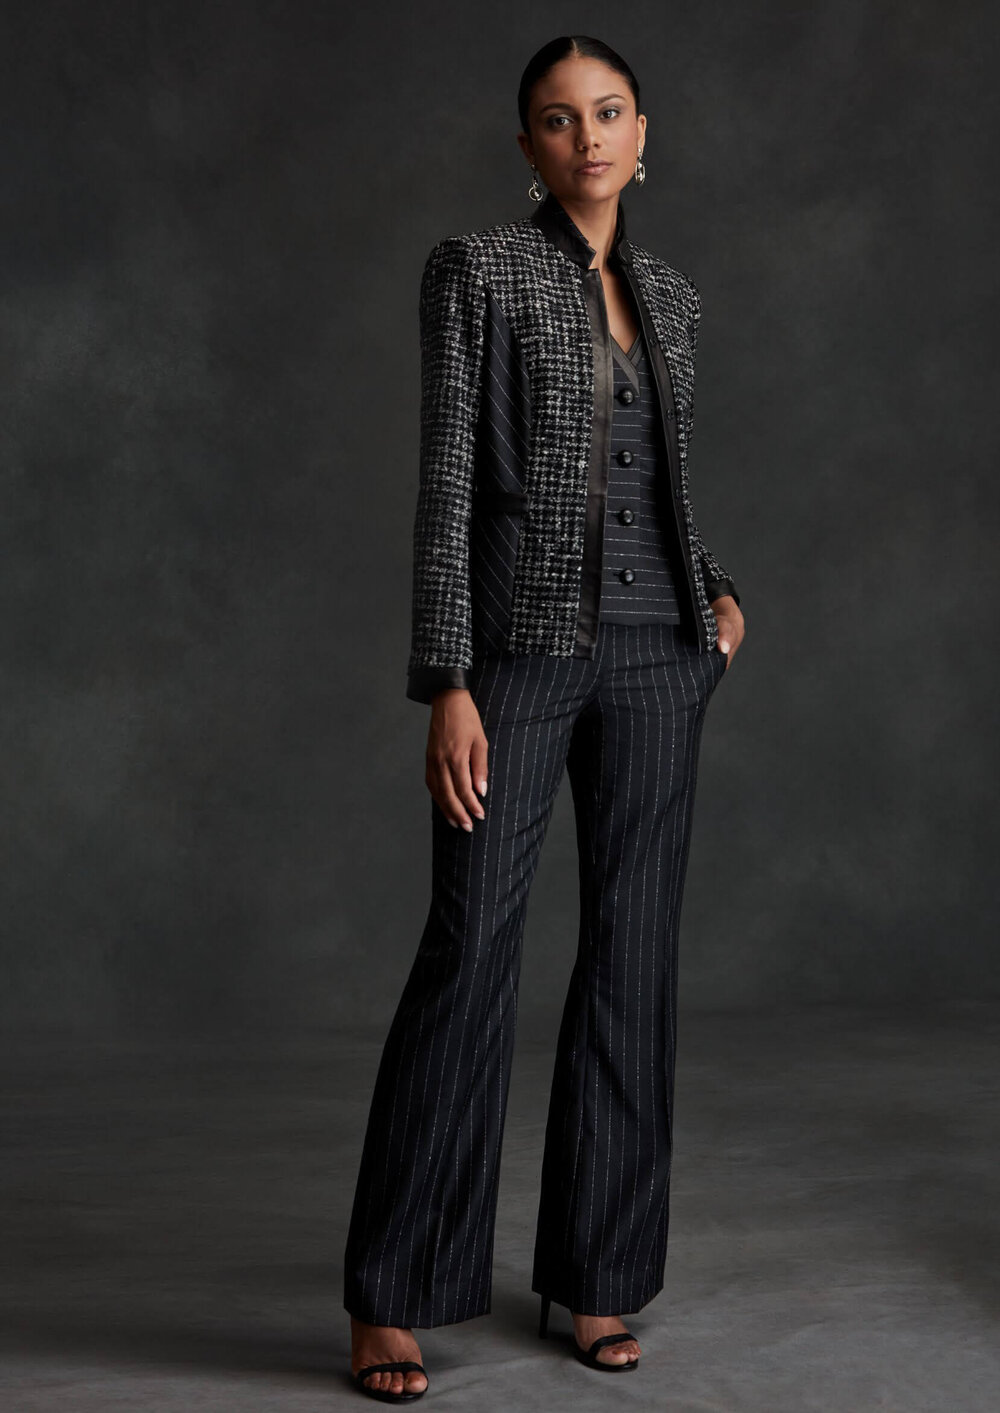 Word gek merknaam Bedrijfsomschrijving Suits for carreer woman: bespoke ladies workwear — Bespoke Tailor for  Custom Suits & Shirts. - About Bespoke Tailoring